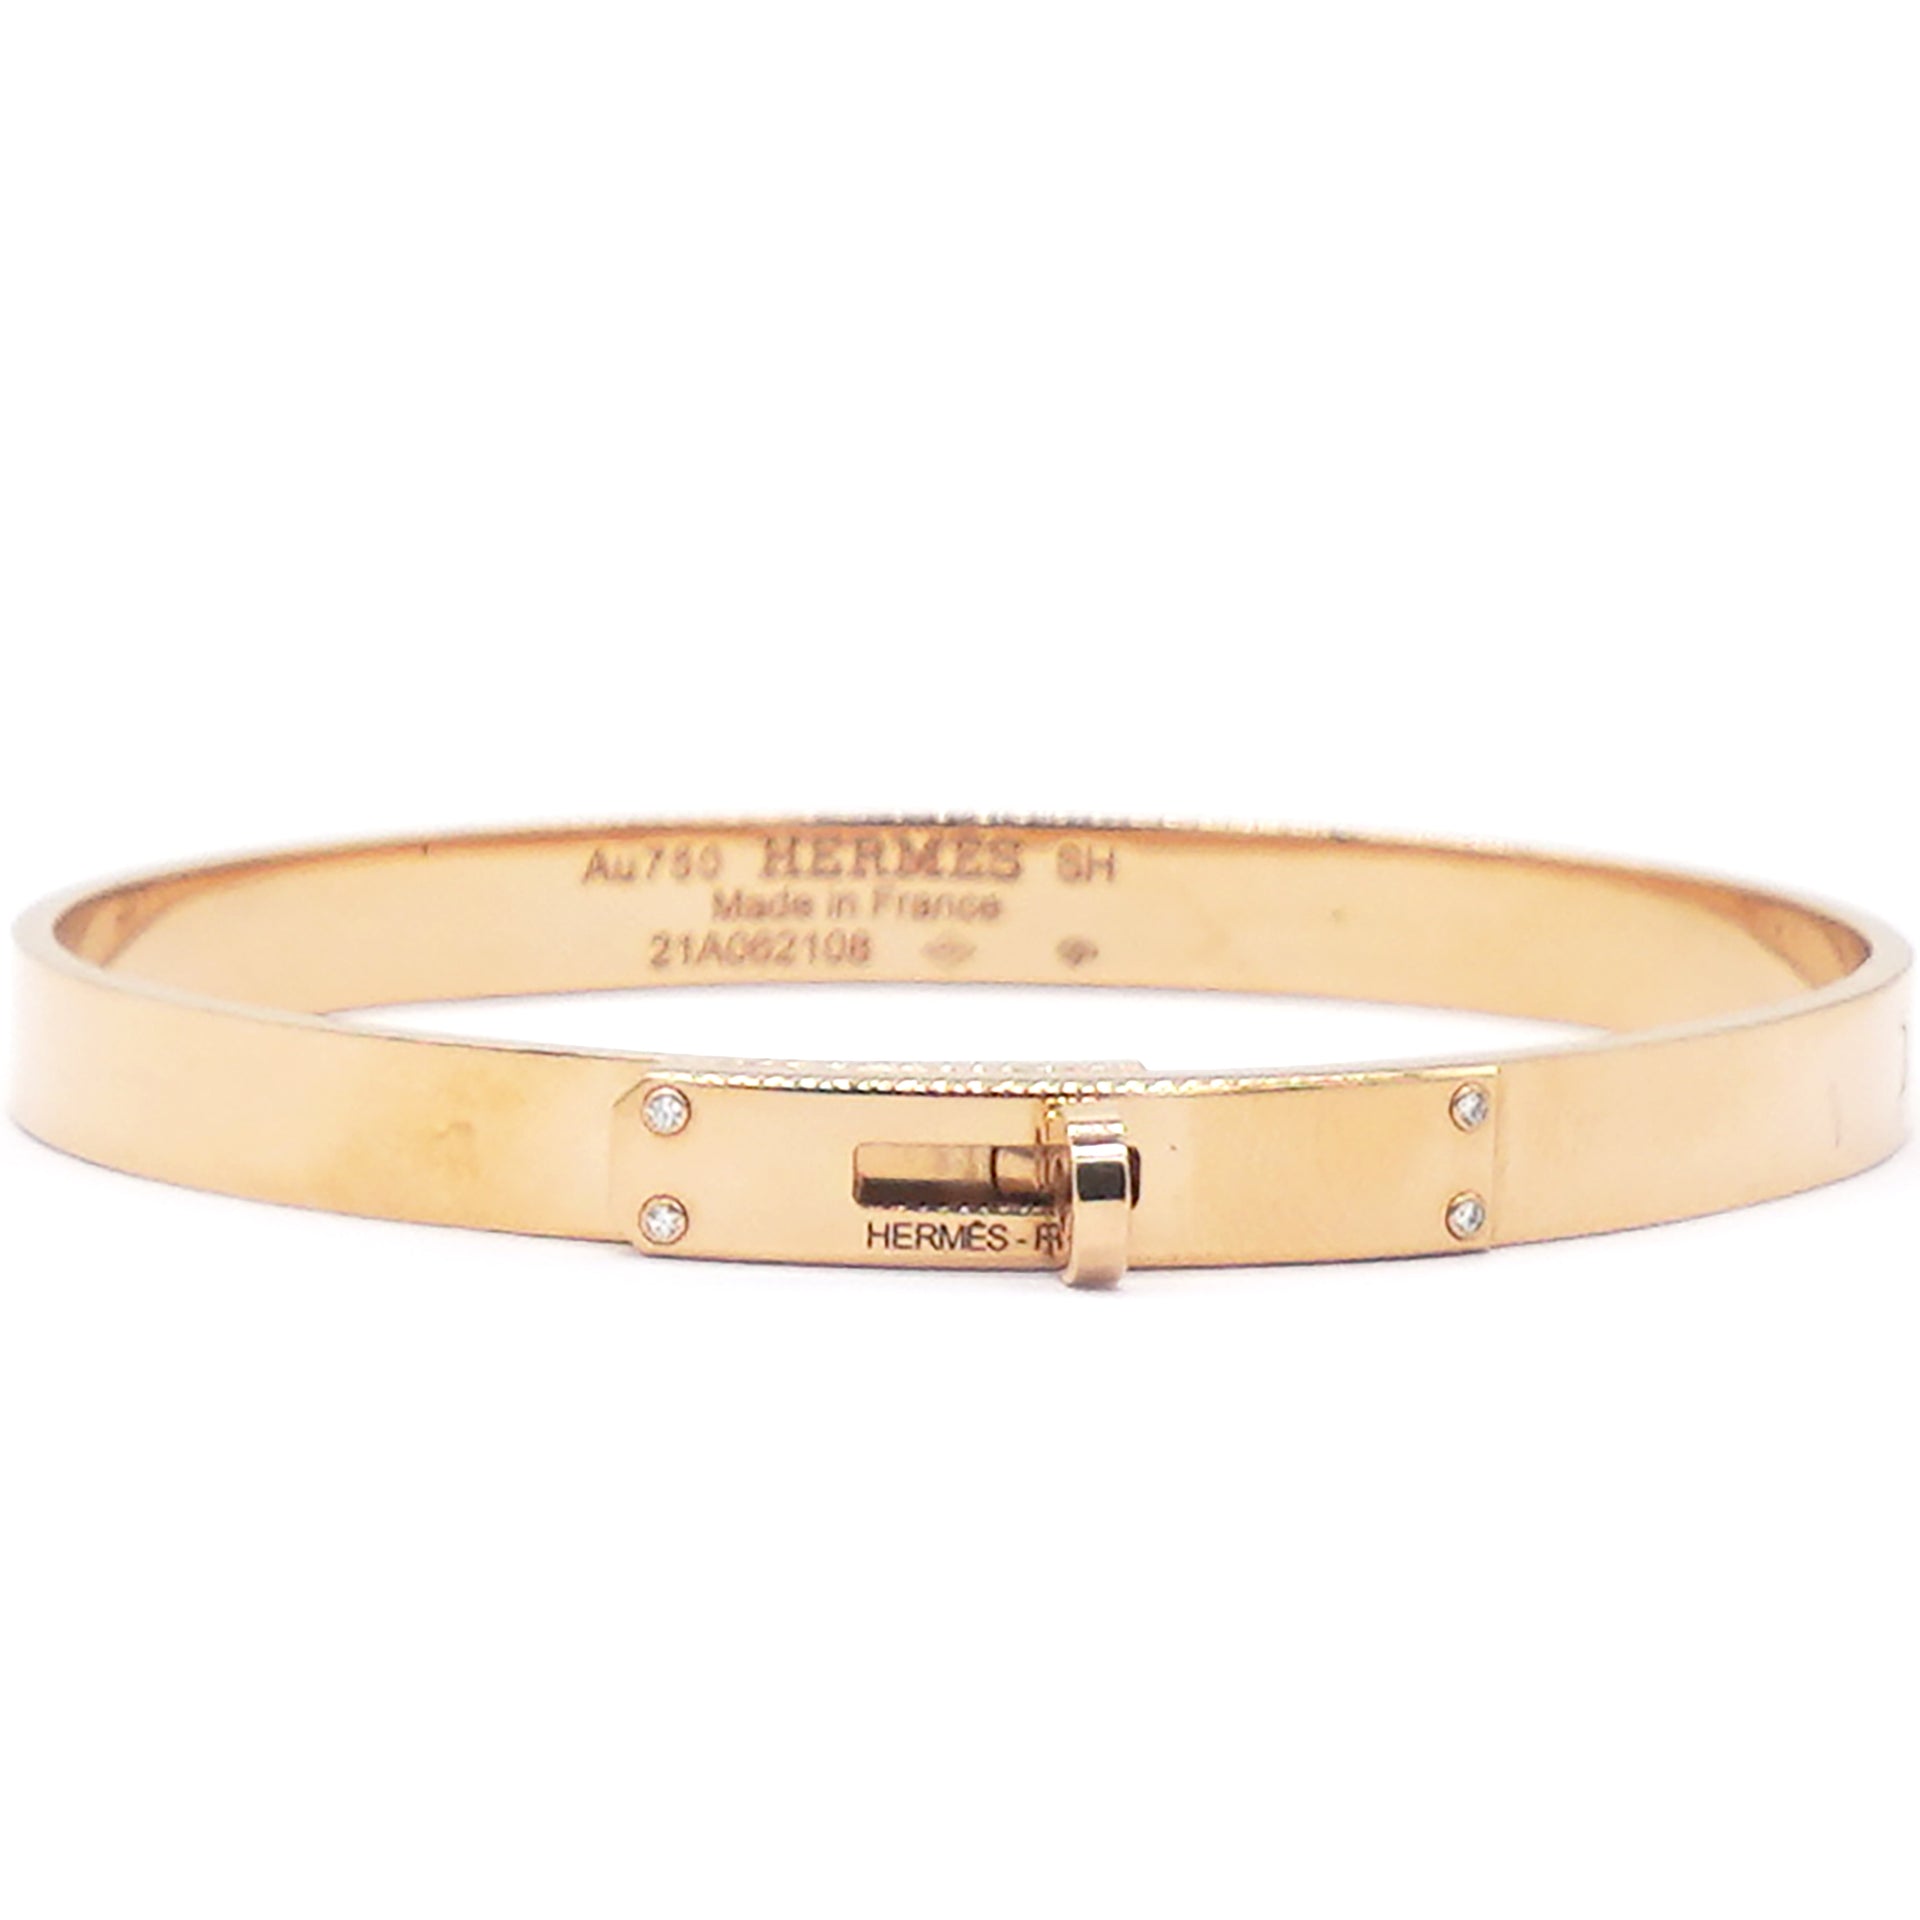 HERMES CLIC H Bracelet - Gold, White enamel £250.00 - PicClick UK